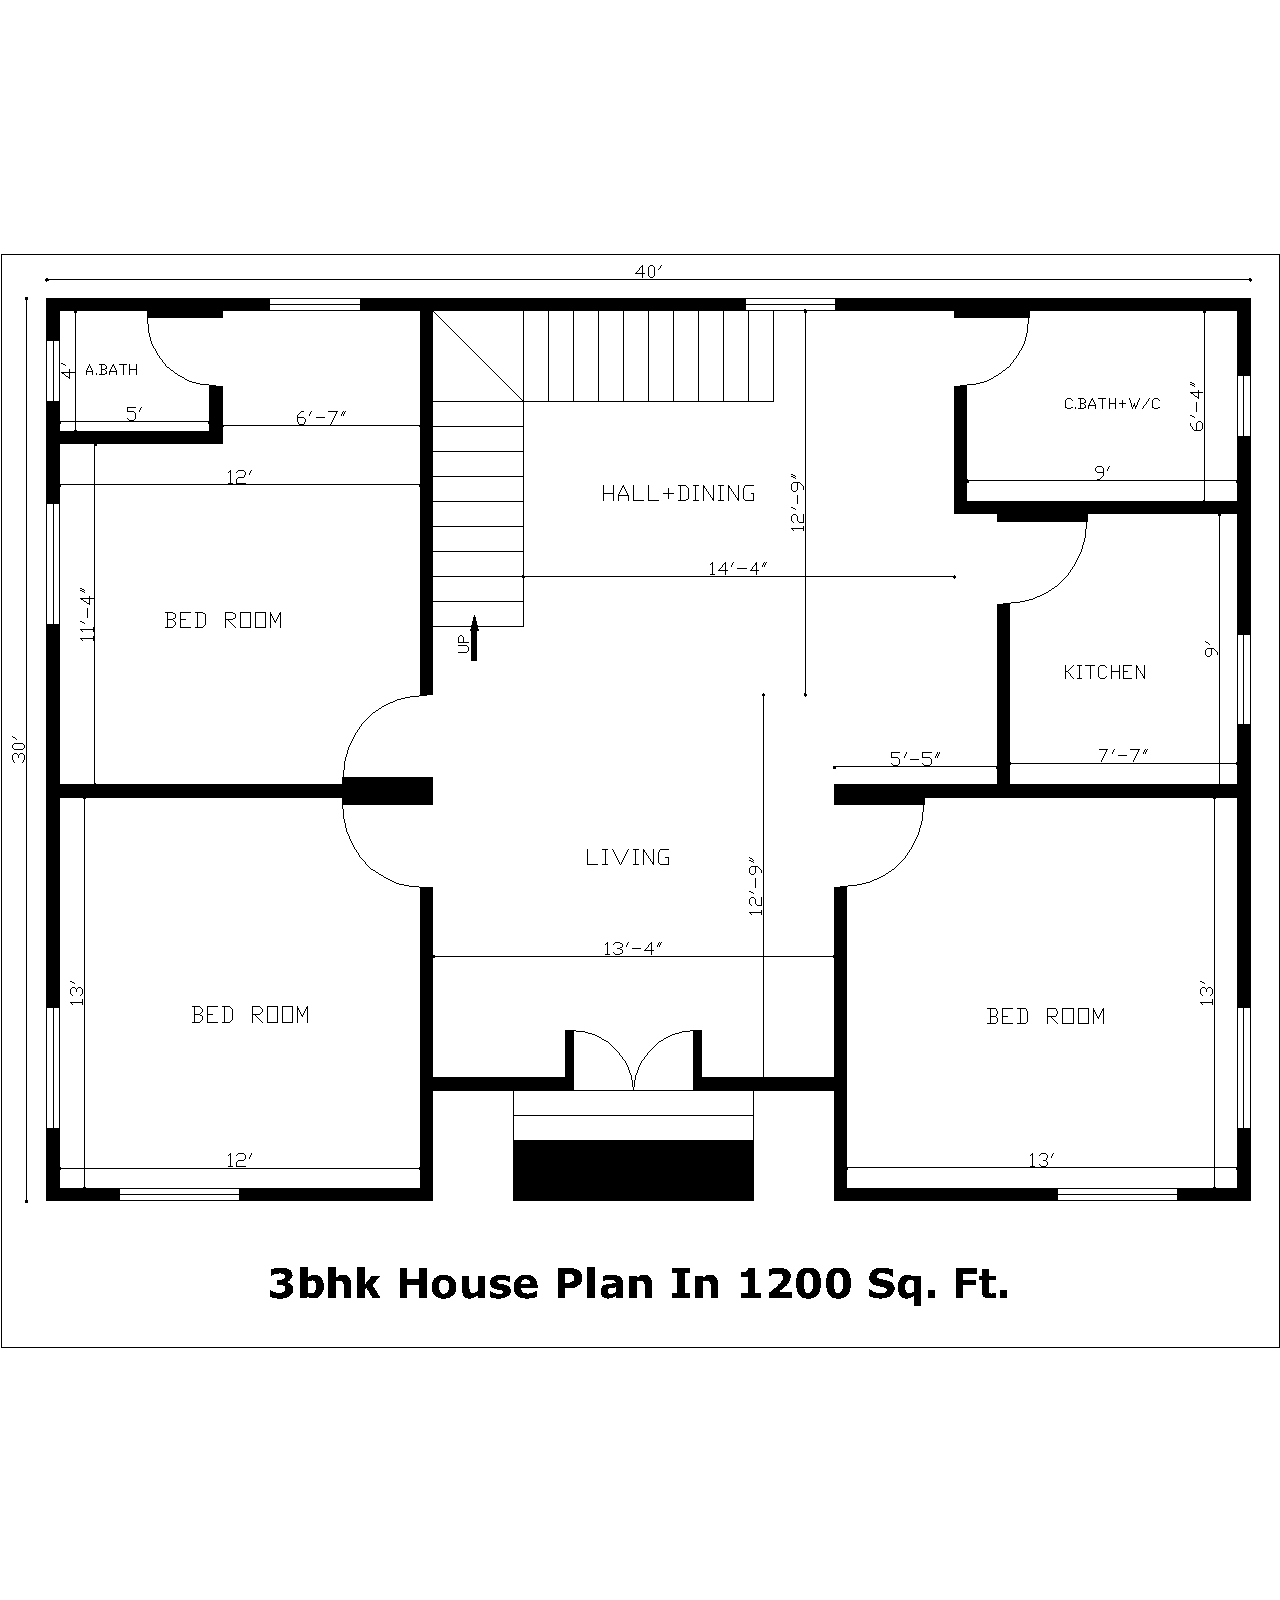 3bhk House Plan In 1200 Sq. Ft. | 3bhk Gharka Naksha In 1200 Sq. Ft.